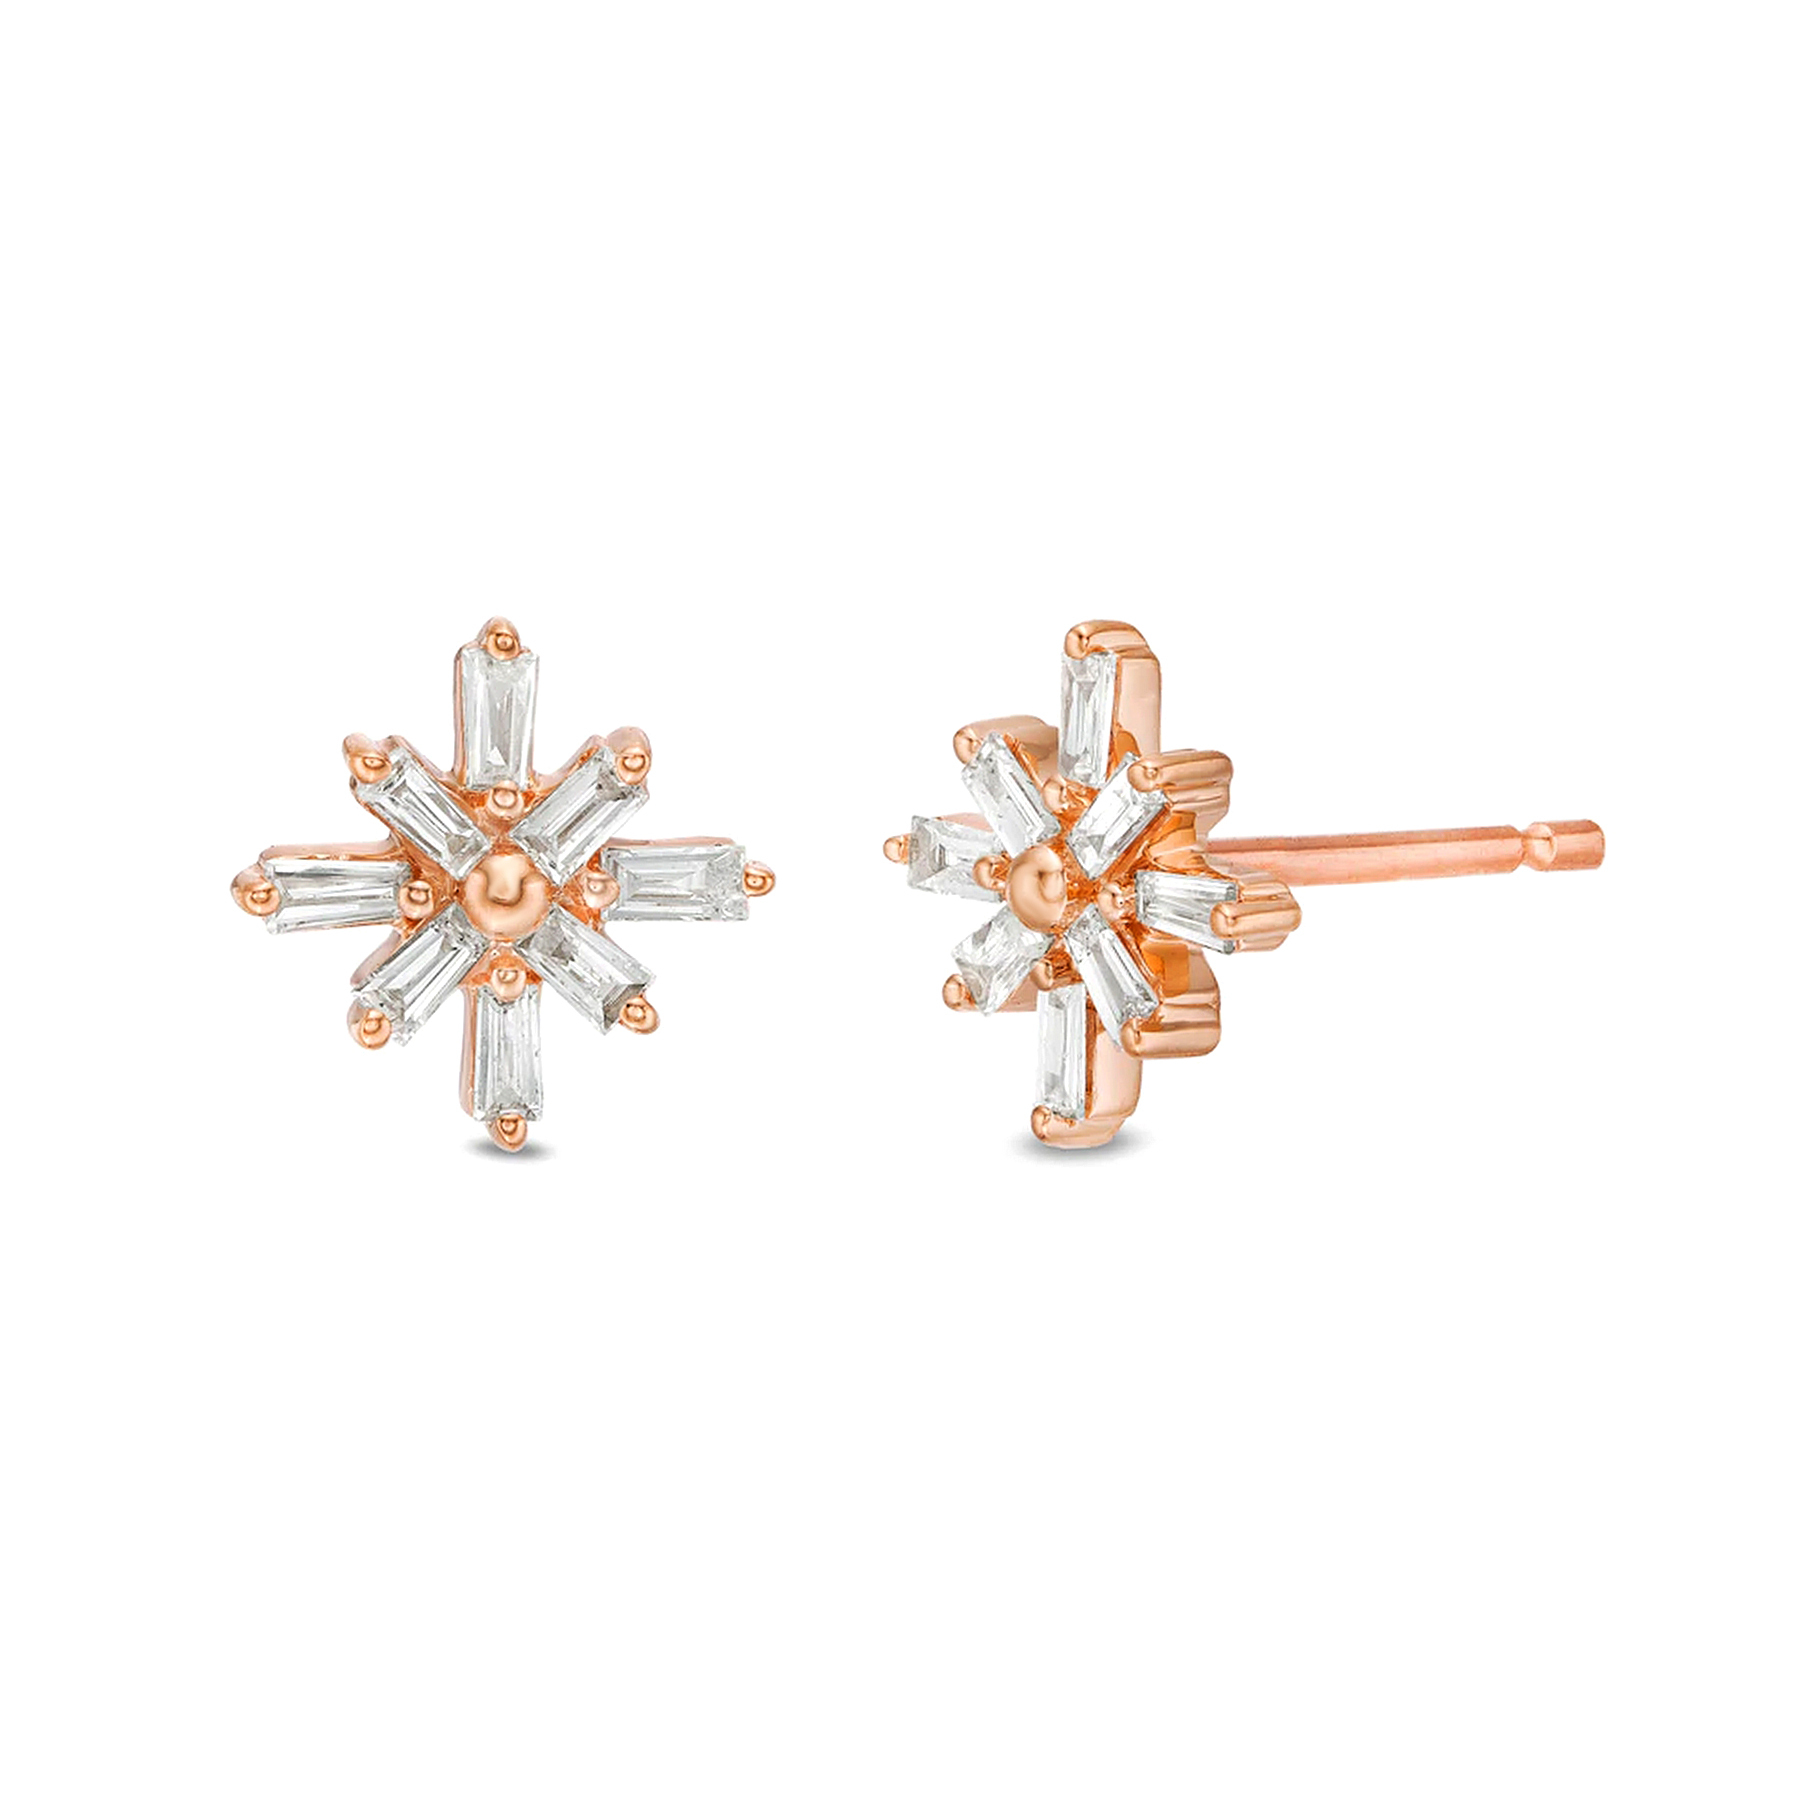 49424-earrings-fashion-diamond-rose-gold-white-diamonds-0-01-h-i2-i3-.jpg